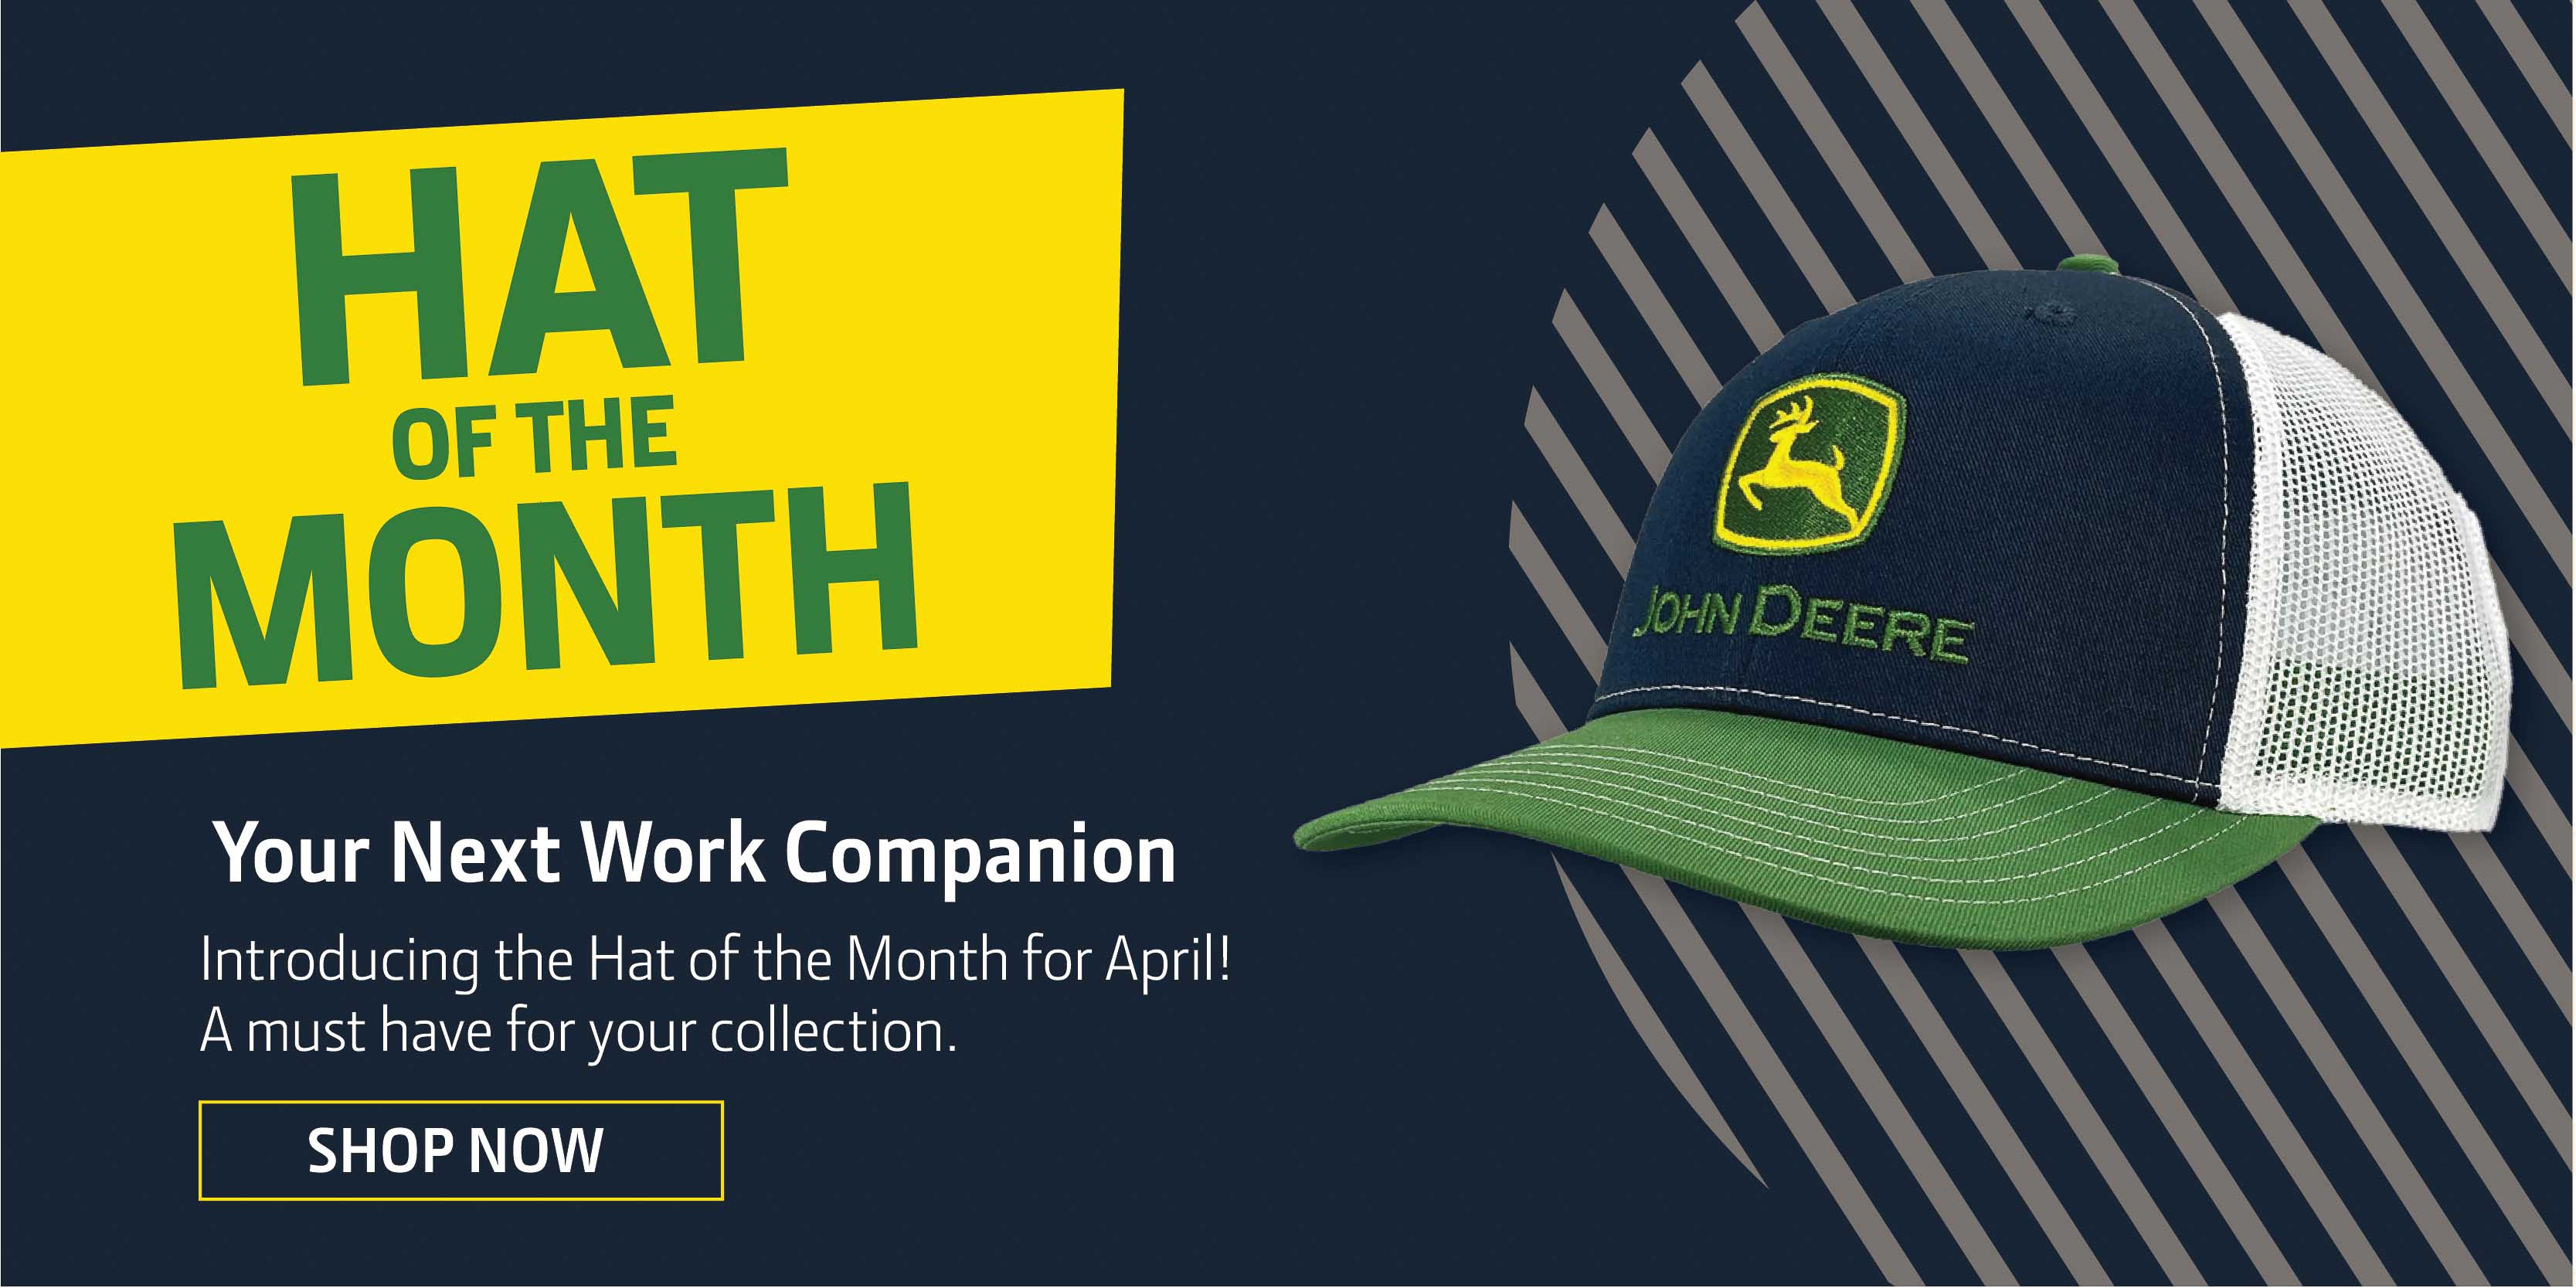 John Deere's April Hat of the Month